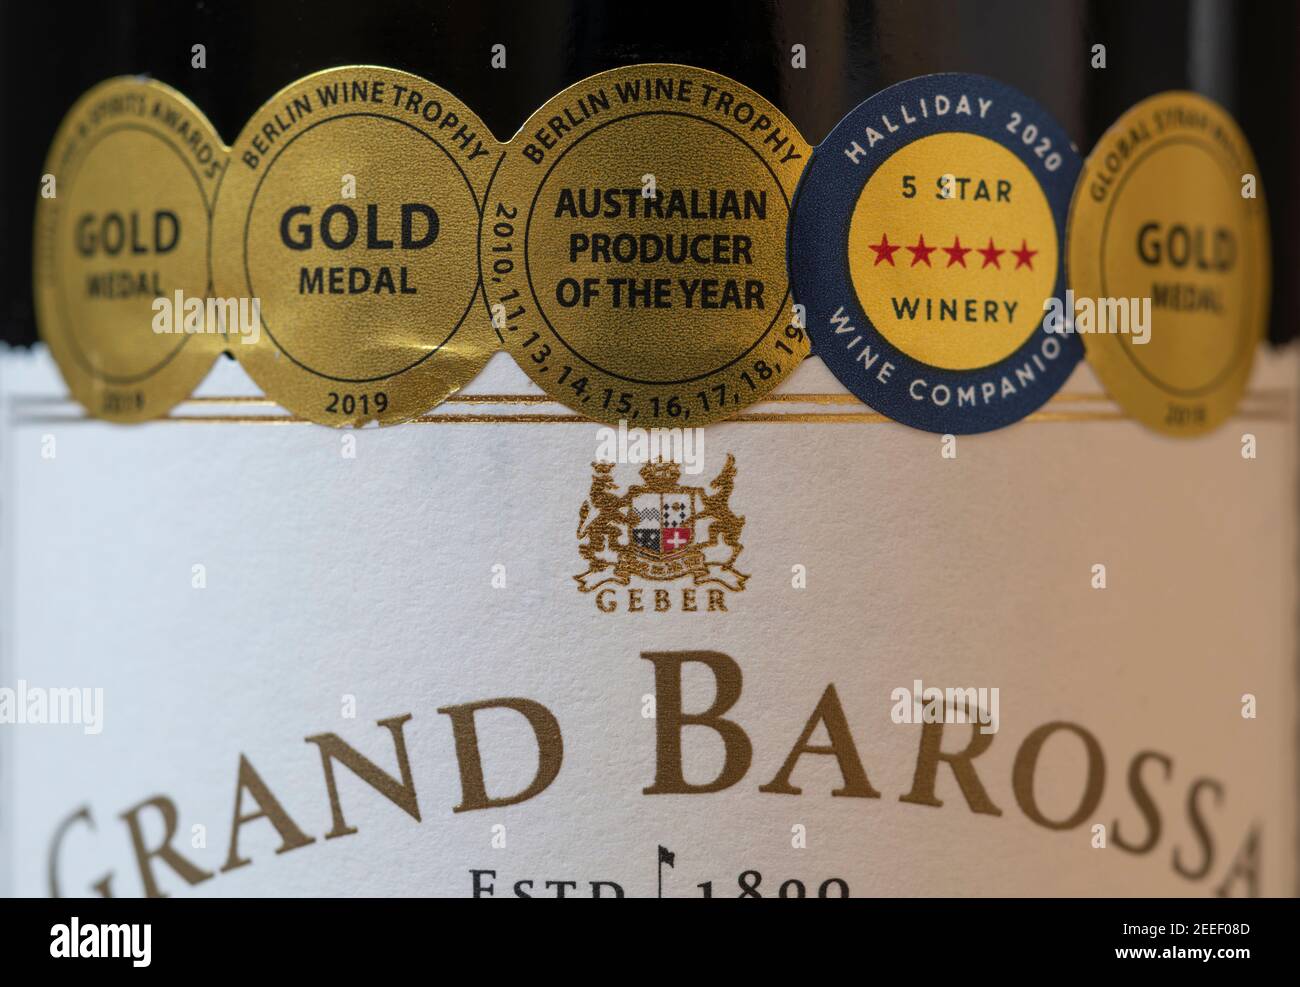 Chateau Tanunda Shiraz 2018 bottiglia australiana di vino etichetta closeup Foto Stock